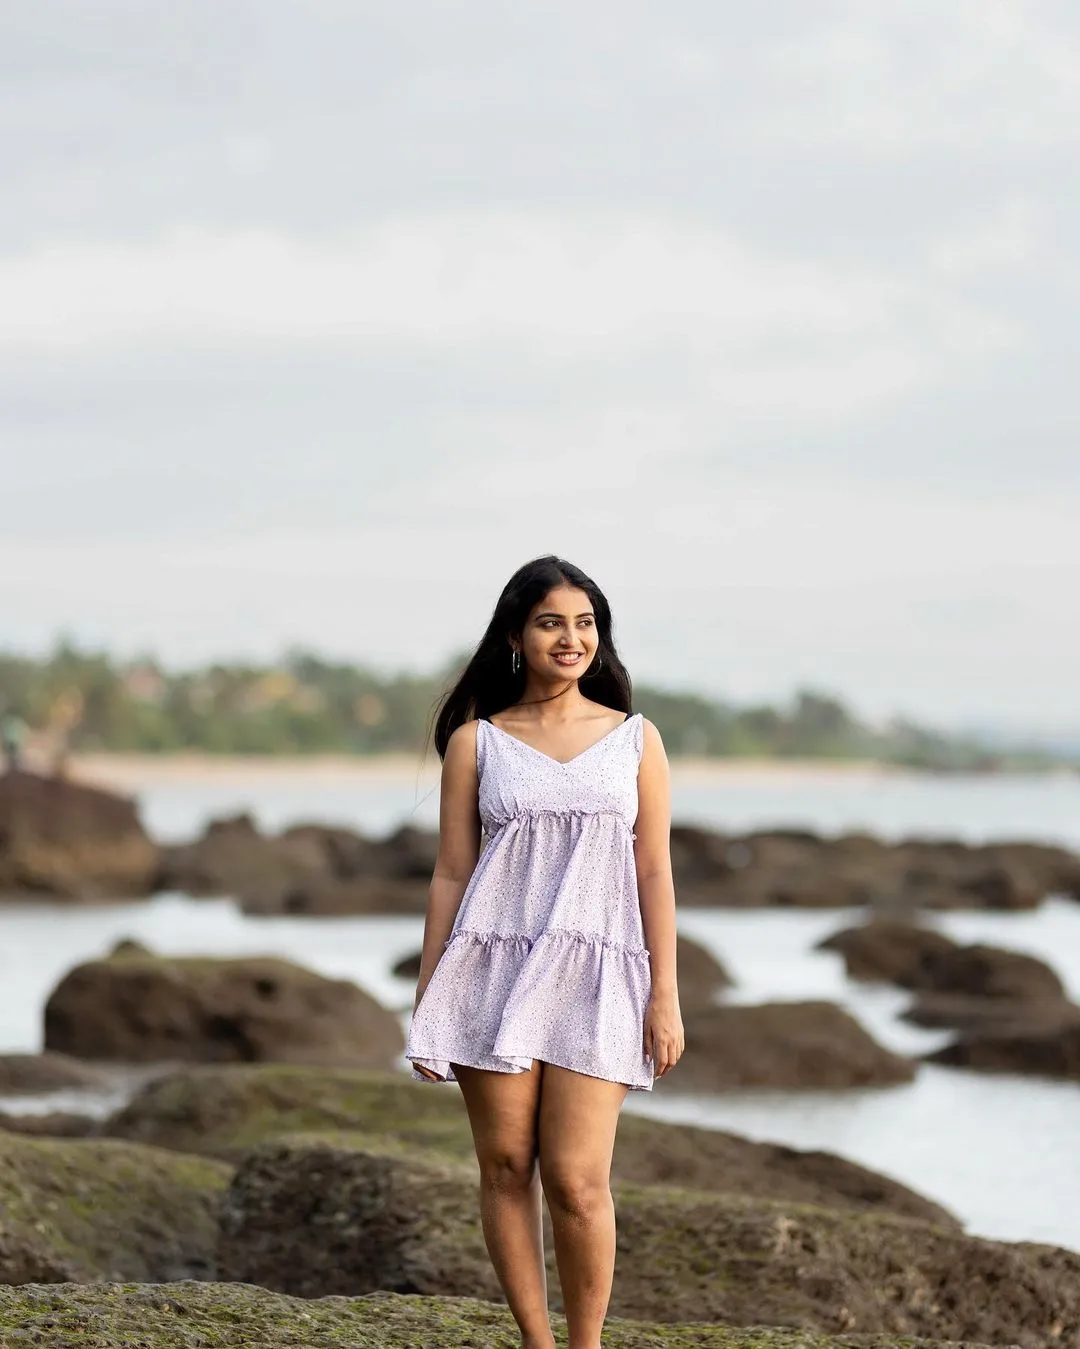 Ananya Nagalla Photoshoot in Short Gown at Beach 